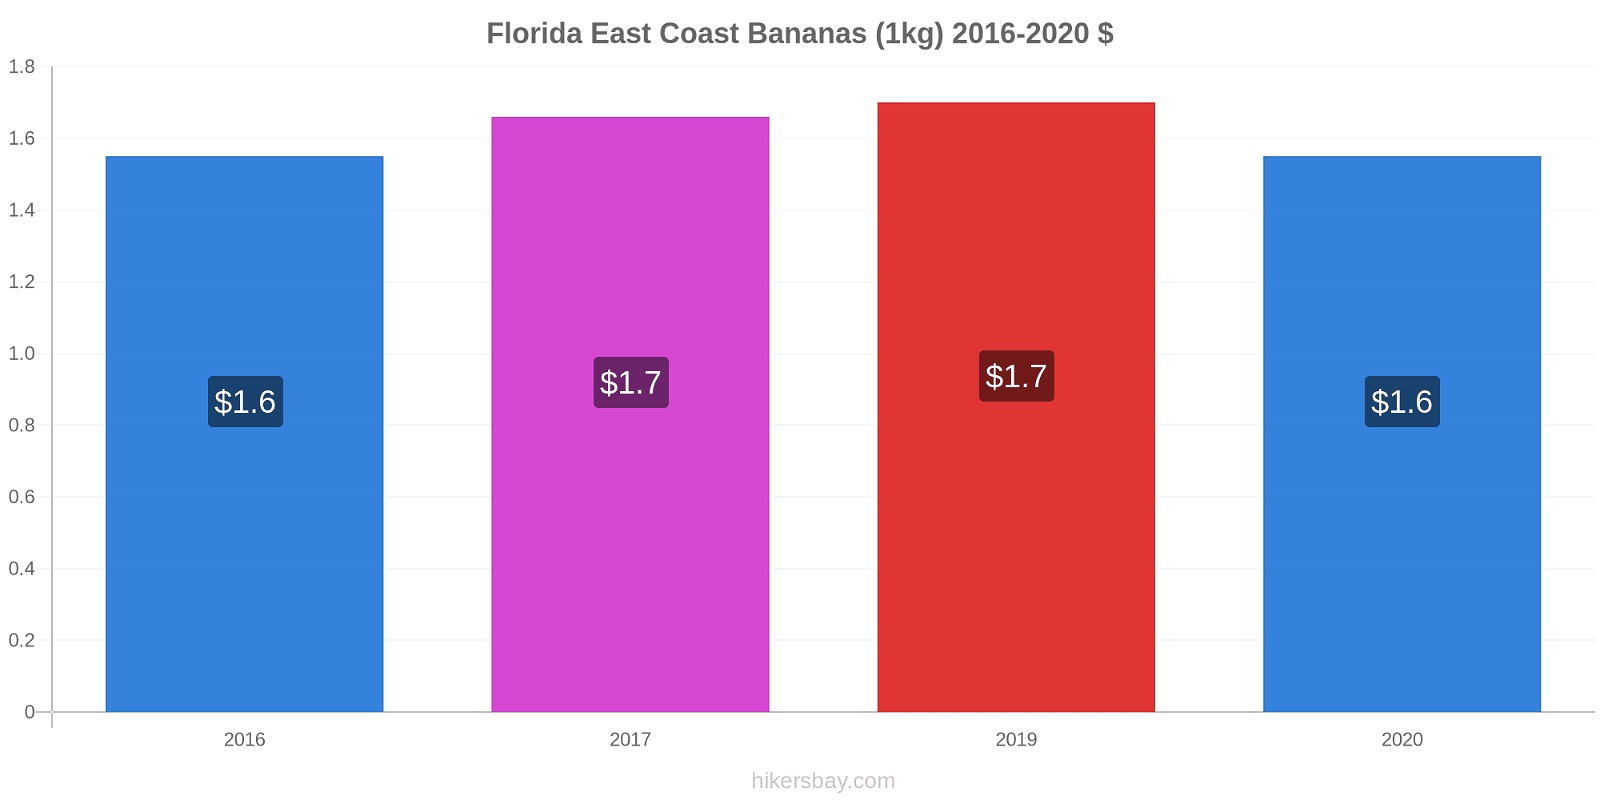 Florida East Coast price changes Bananas (1kg) hikersbay.com